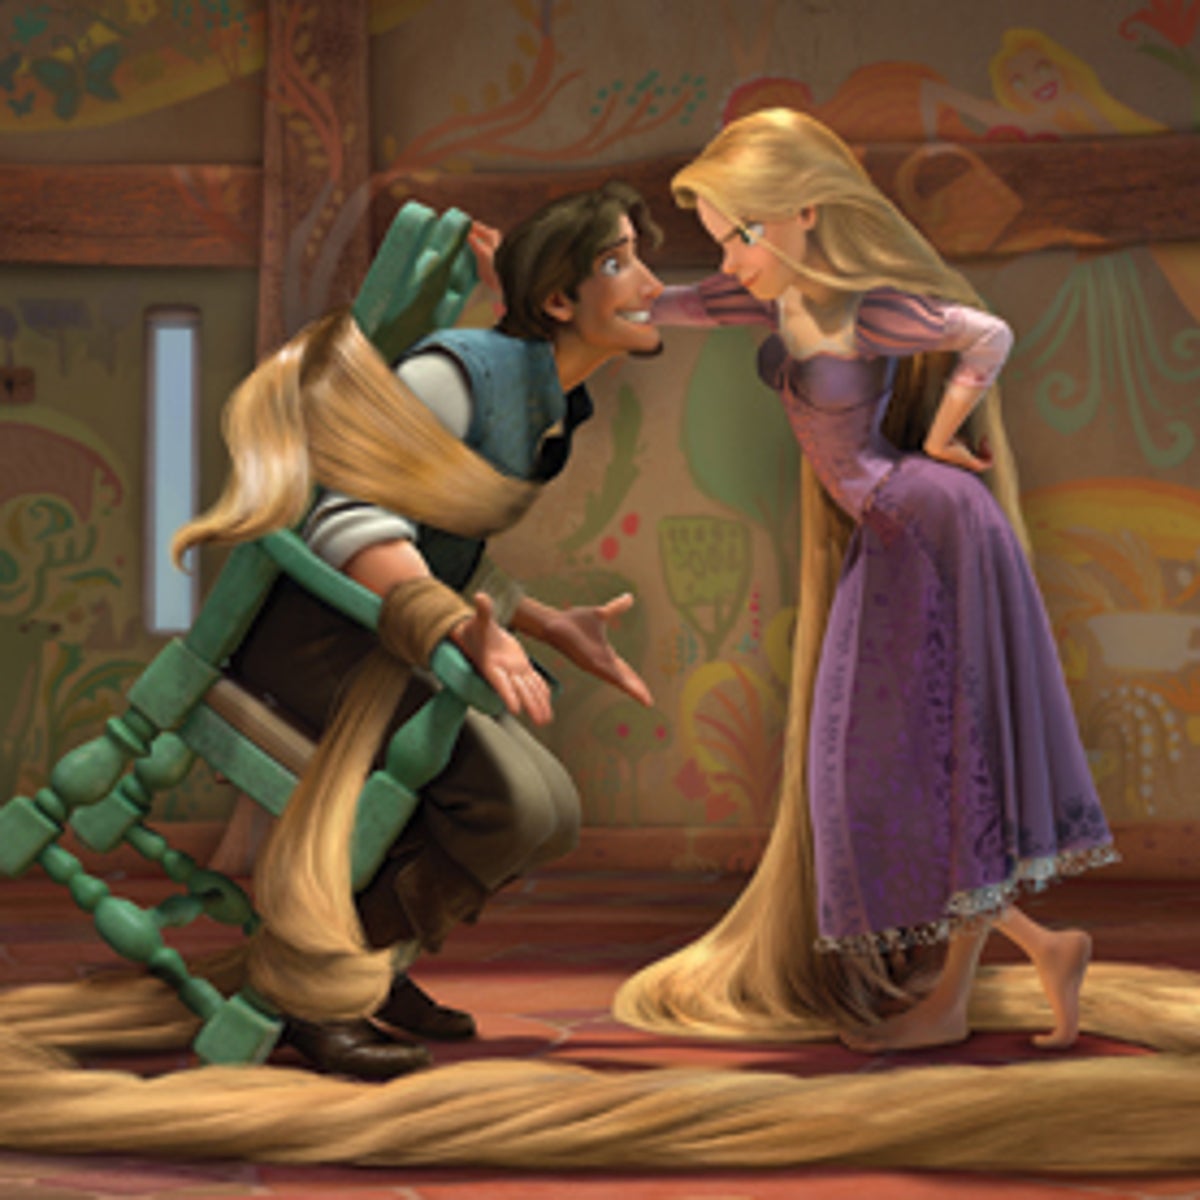 Rapunzel - Tangled movie - Disney - Character profile 